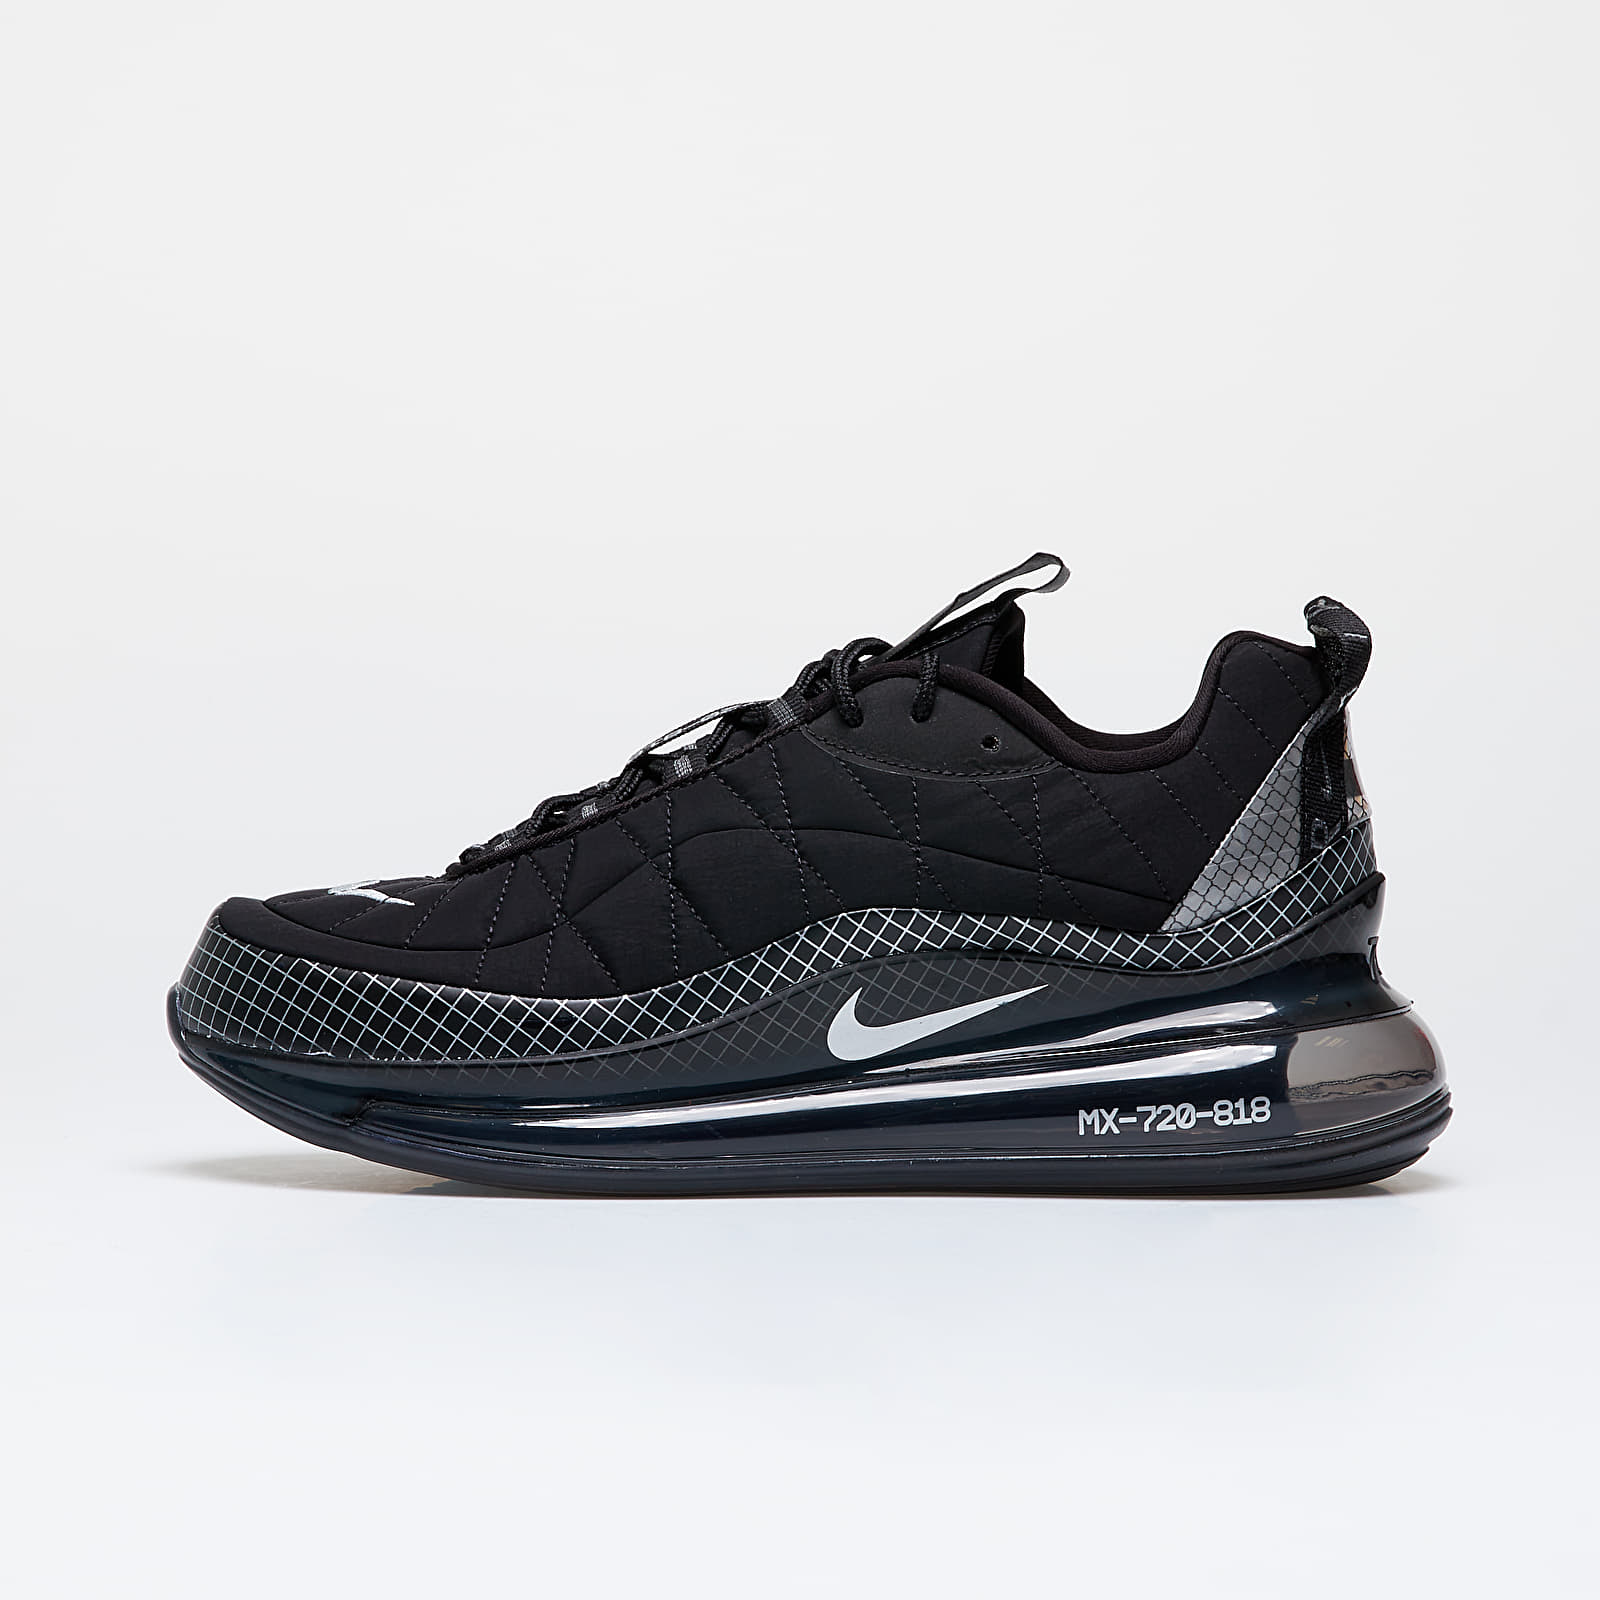 Chaussures et baskets homme Nike Mx-720-818 Black/ Metallic Silver-Black-Anthracite